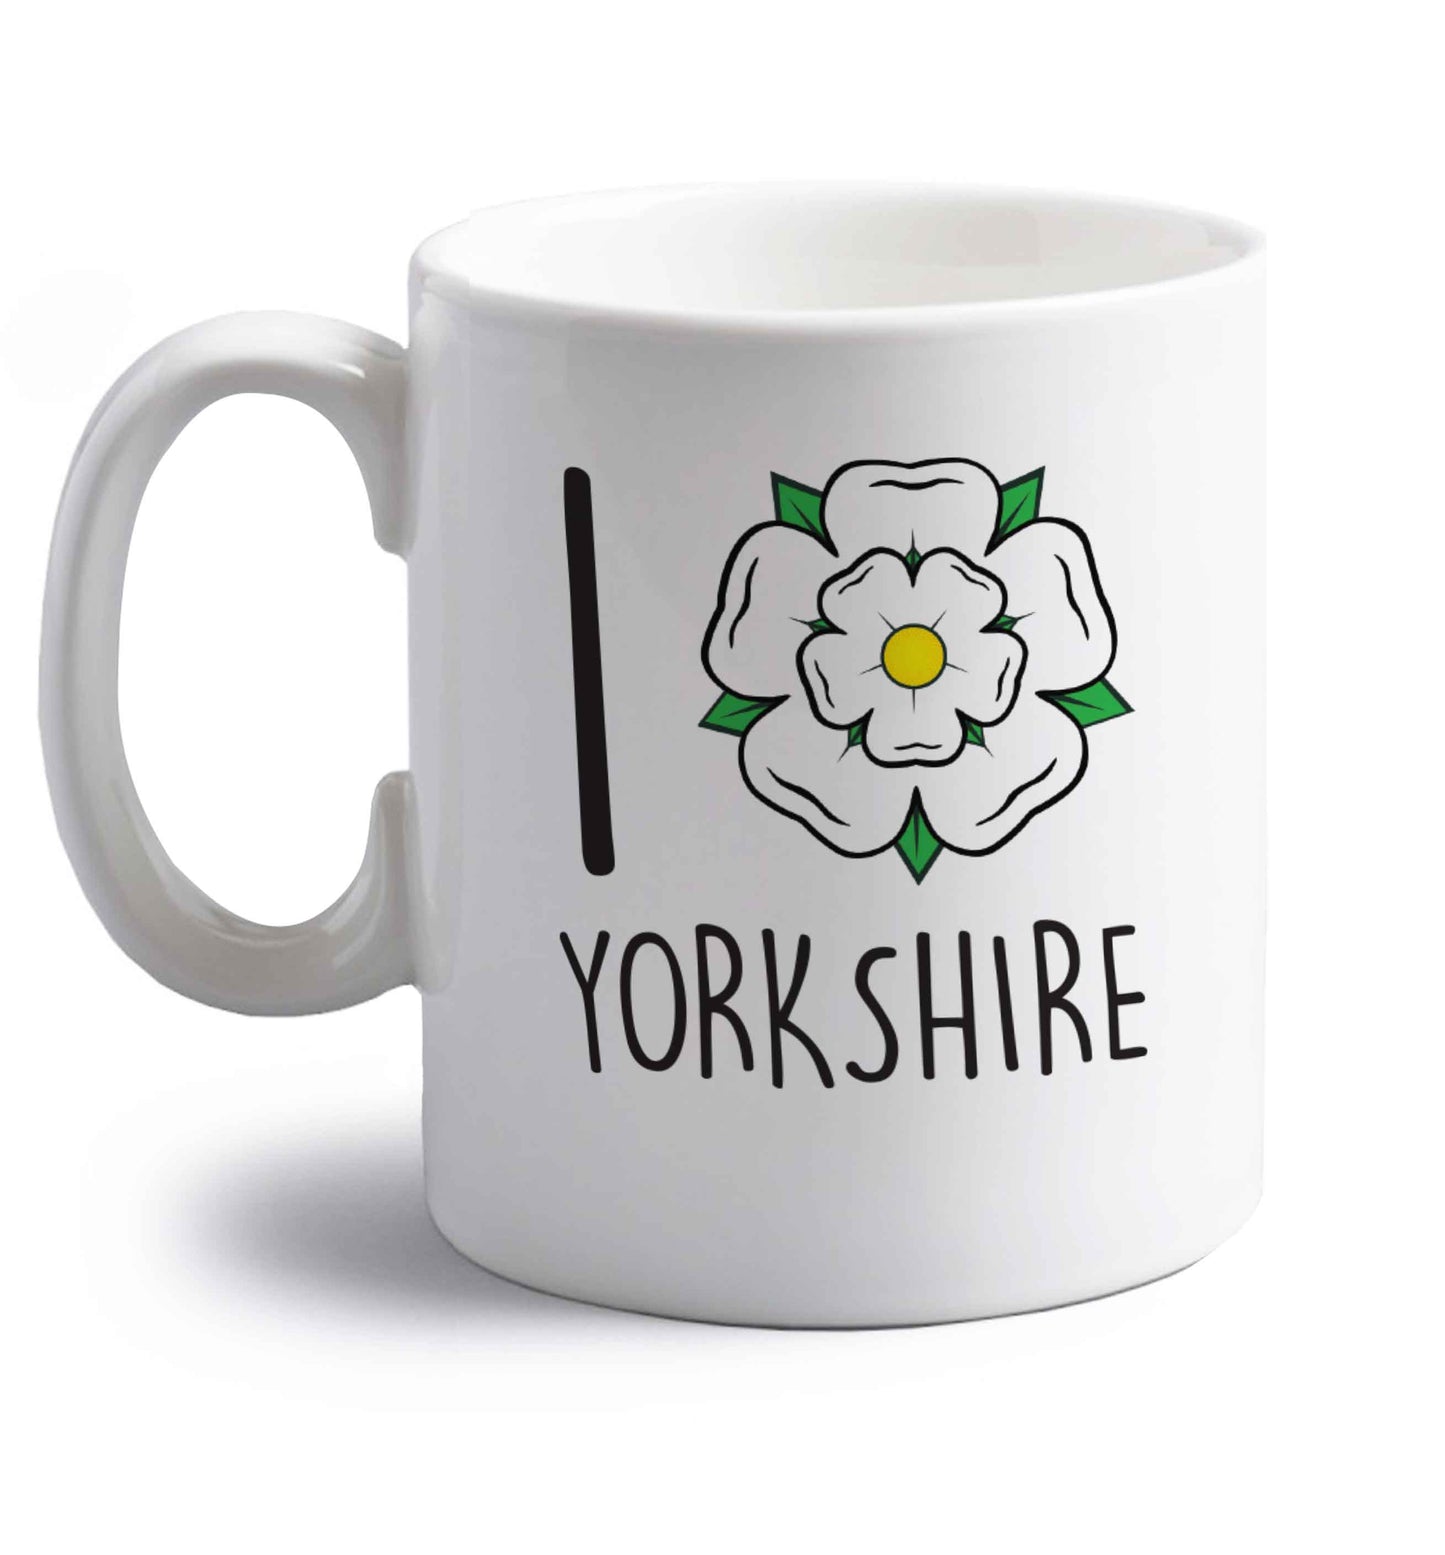 I love Yorkshire right handed white ceramic mug 